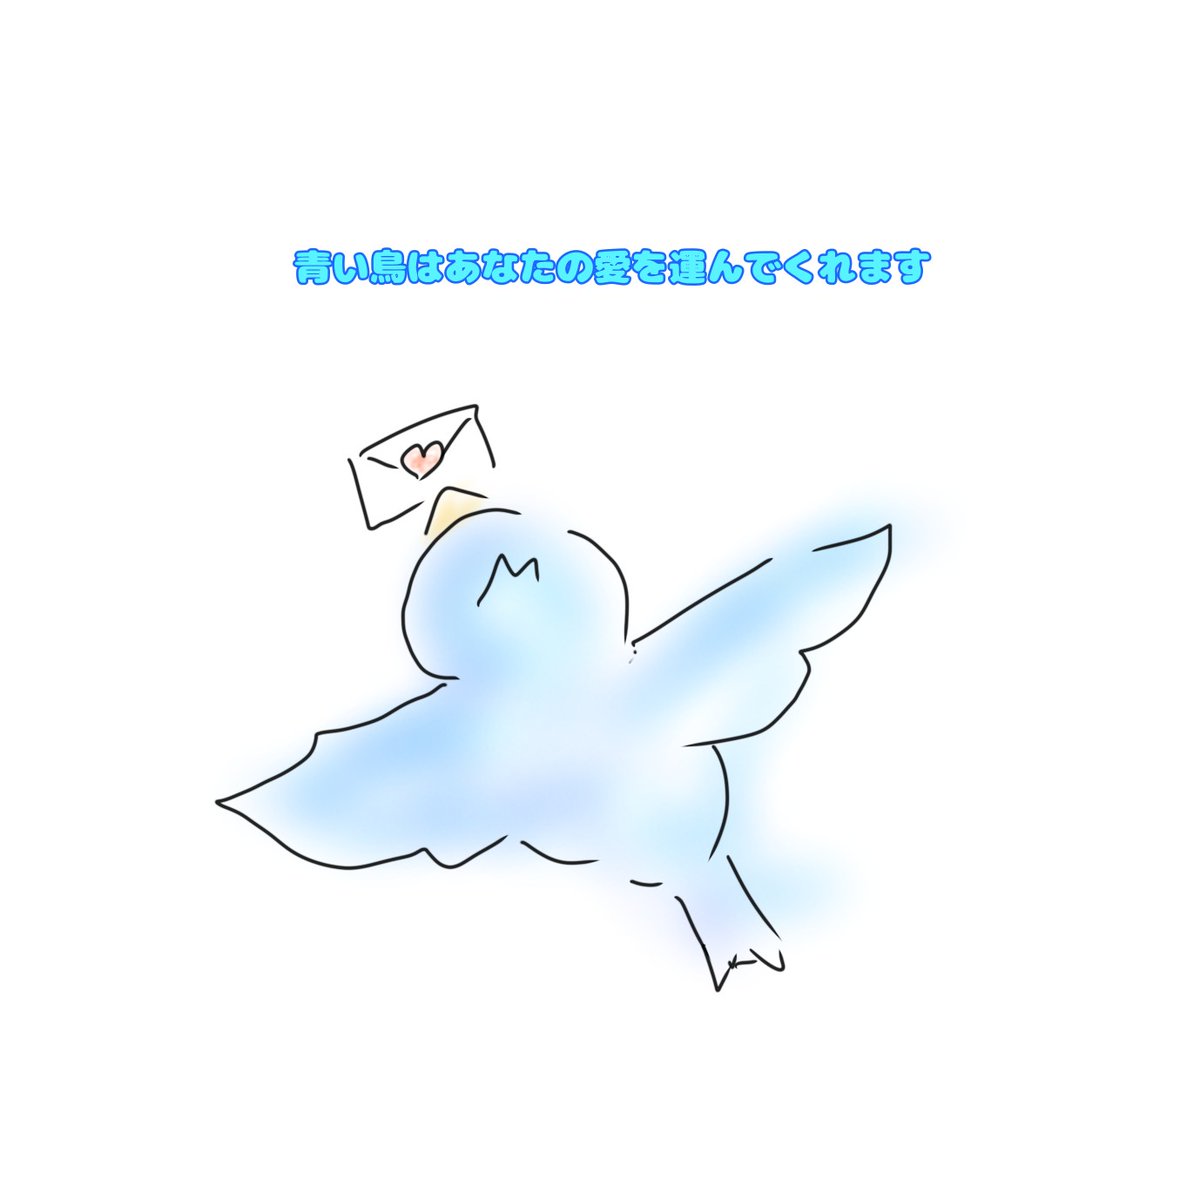 no humans bird love letter white background heart letter envelope  illustration images